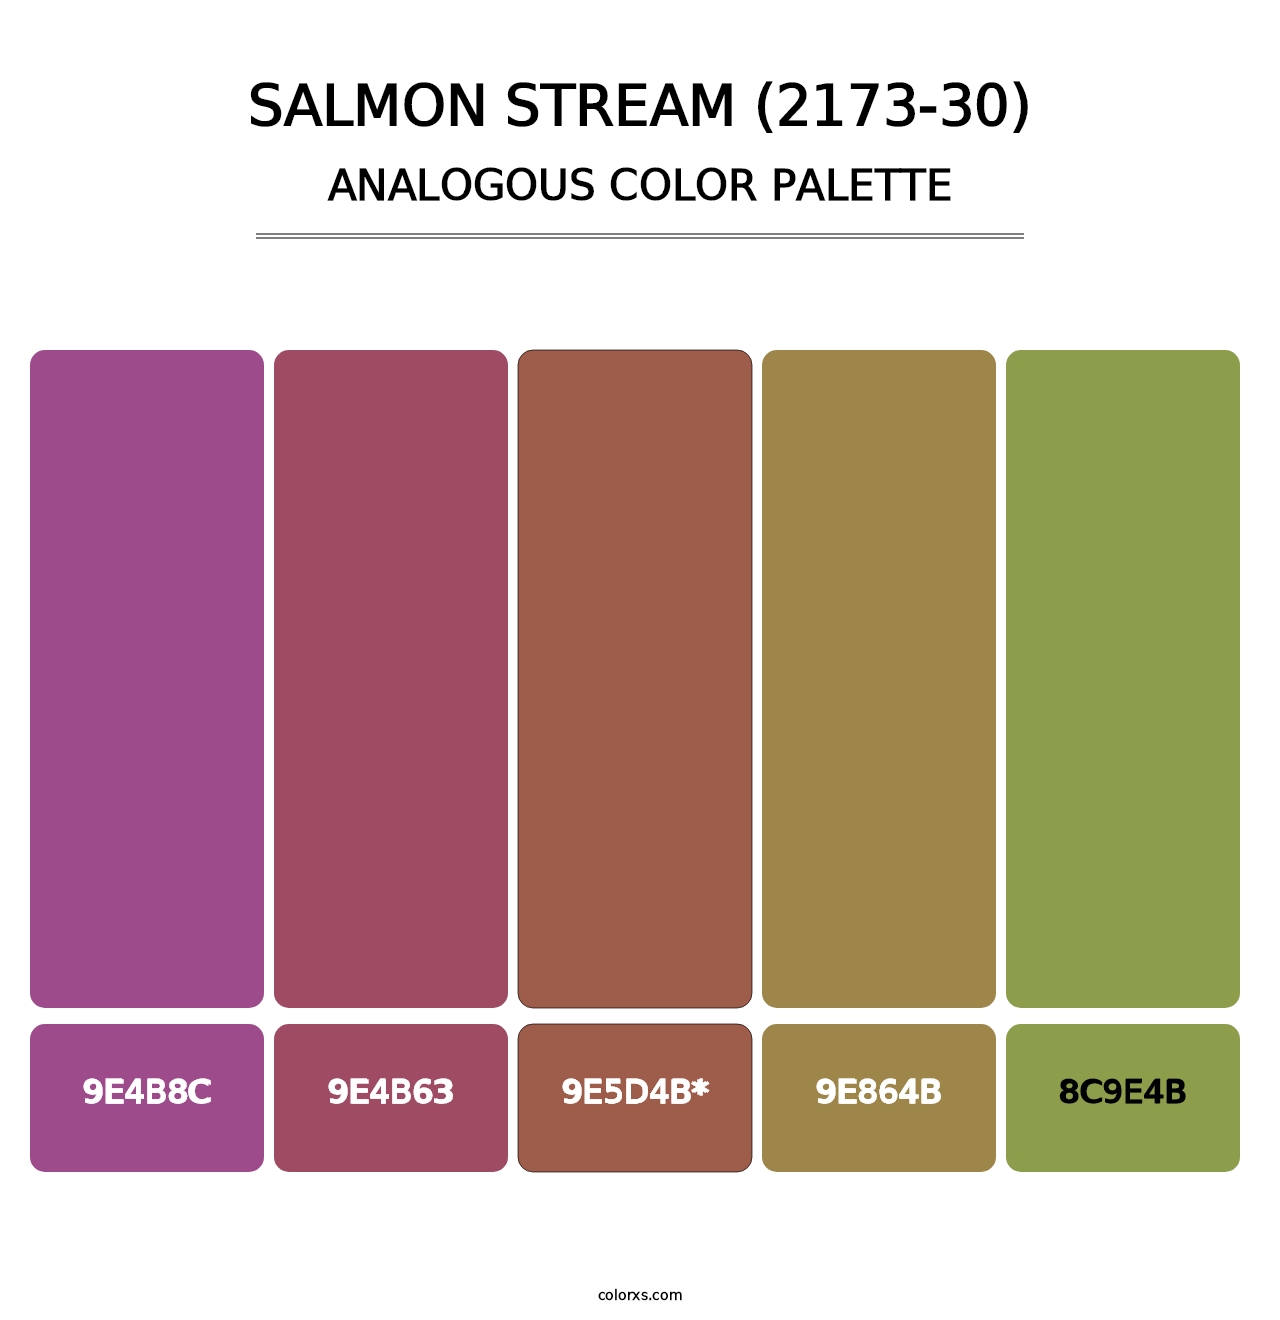 Salmon Stream (2173-30) - Analogous Color Palette